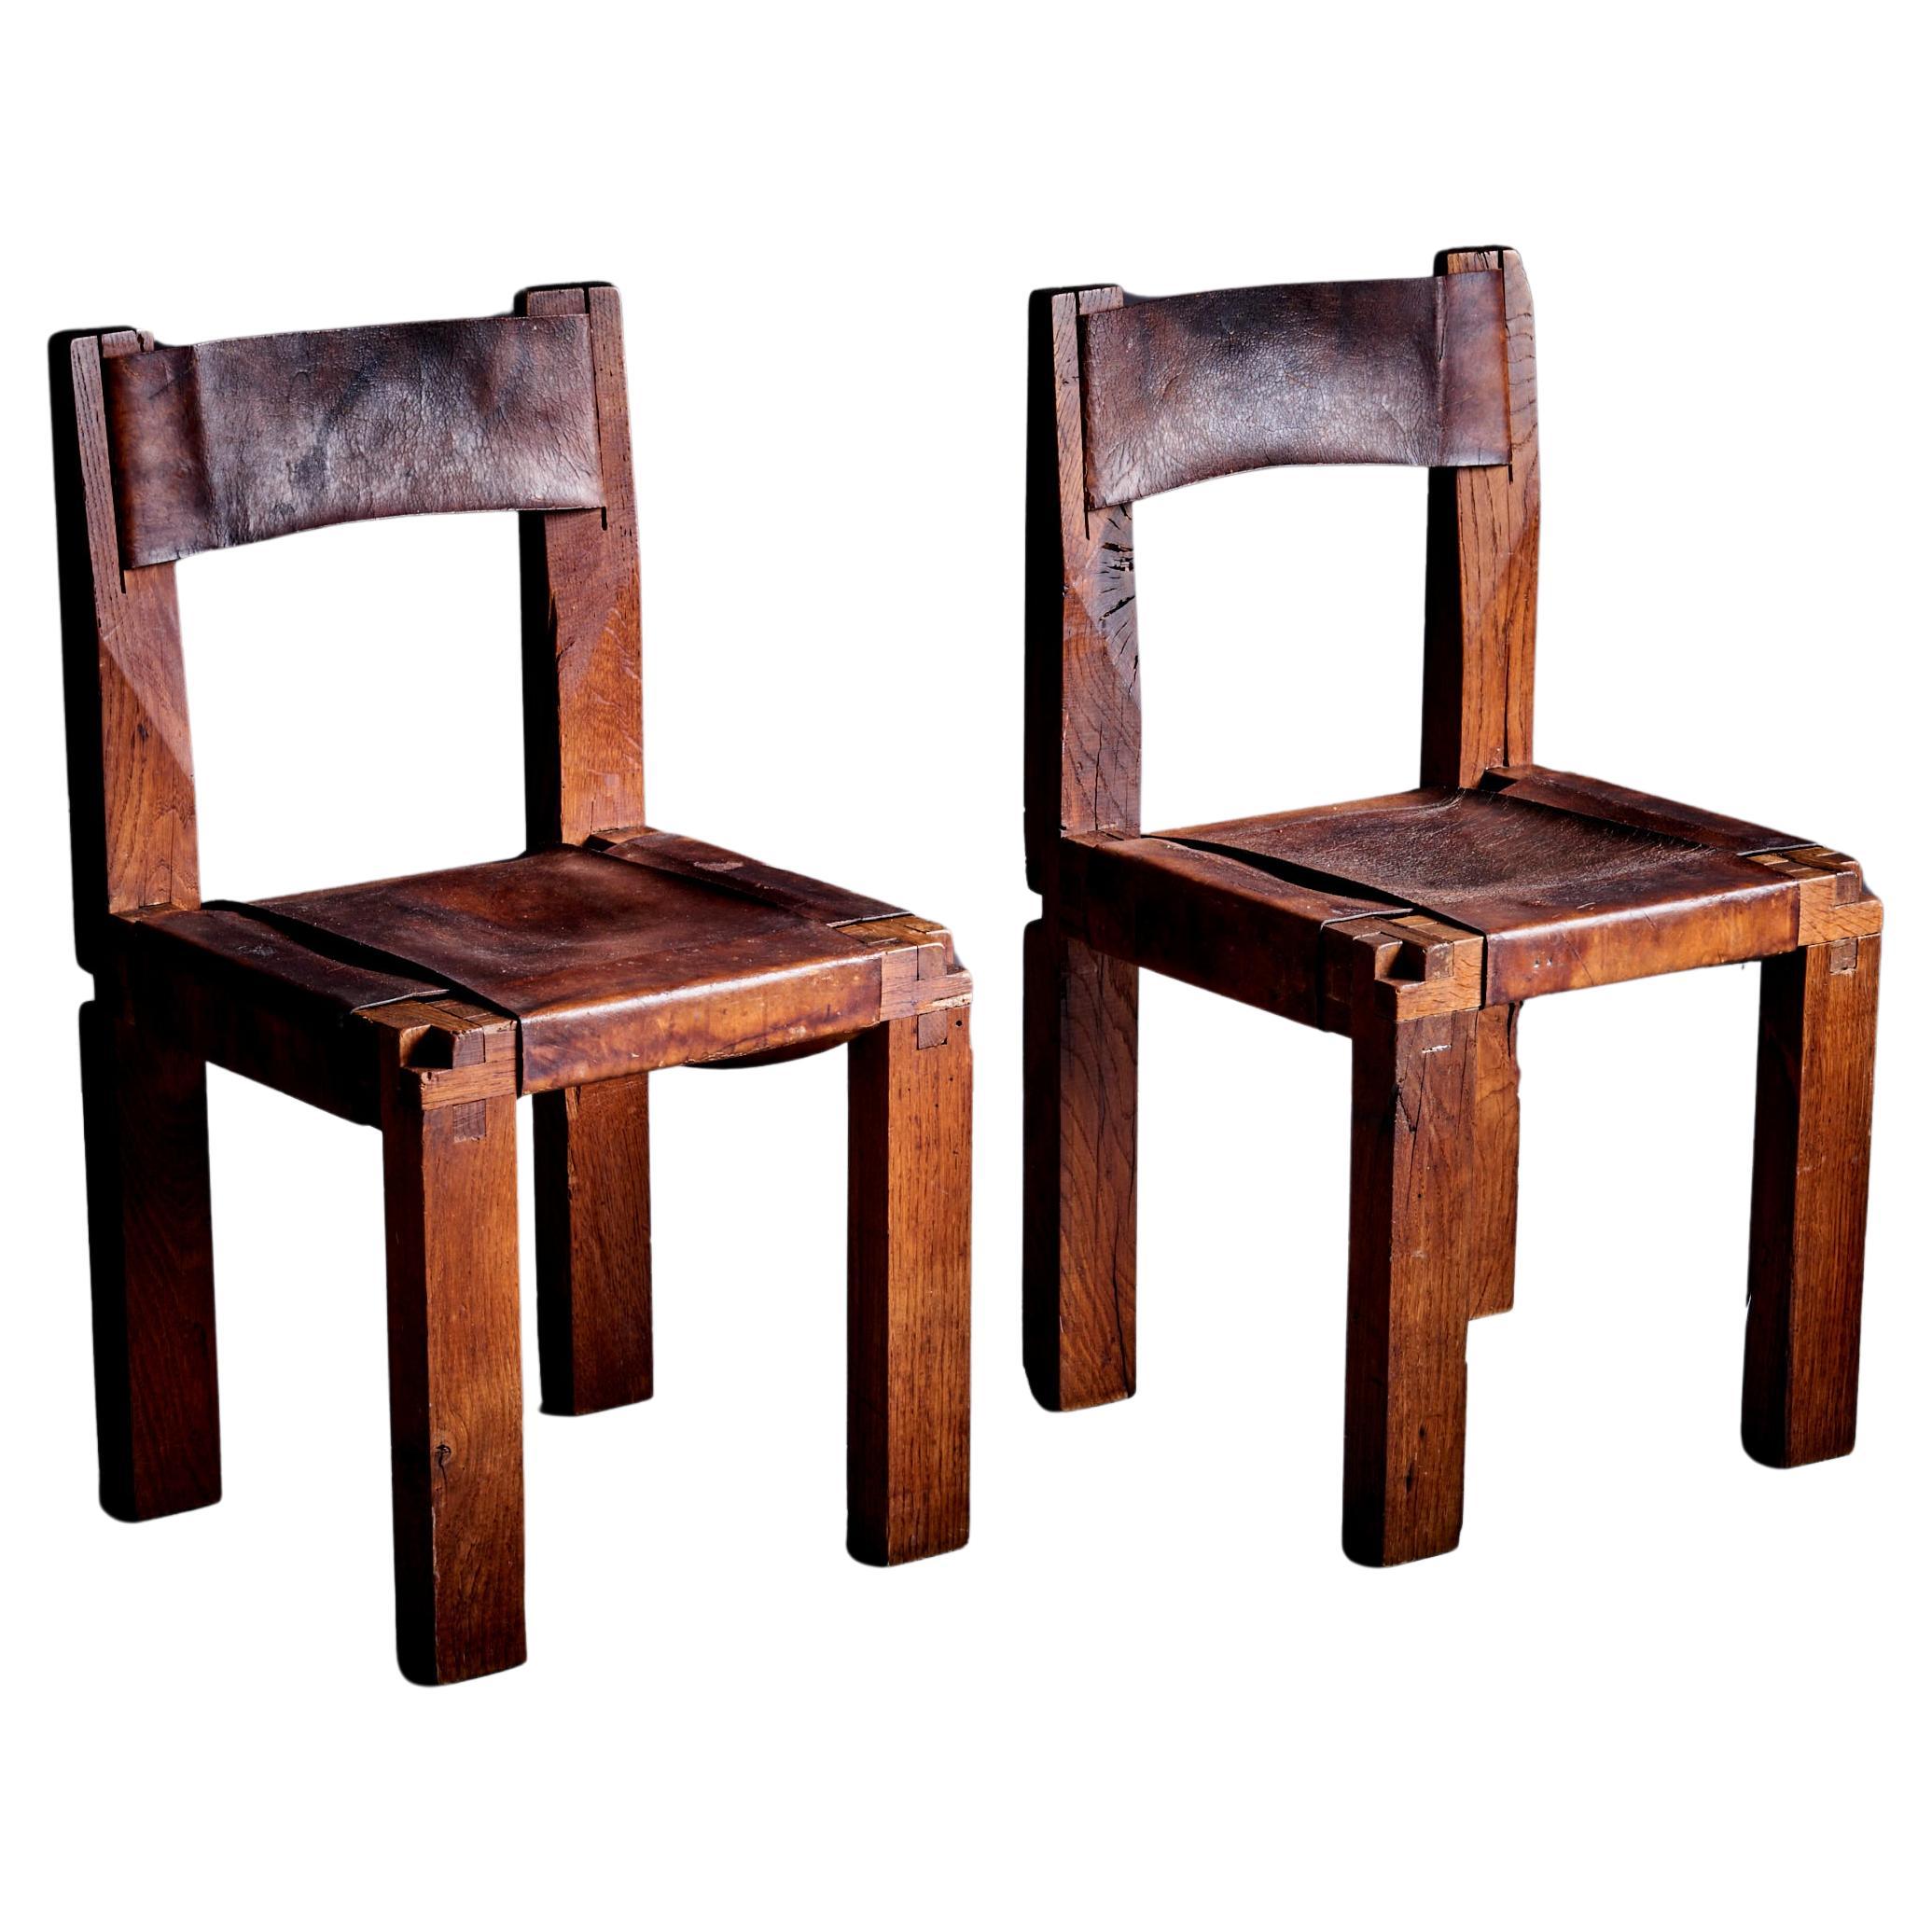 Pair of Pierre chapo Side Chairs S11 in oak France - 1960s